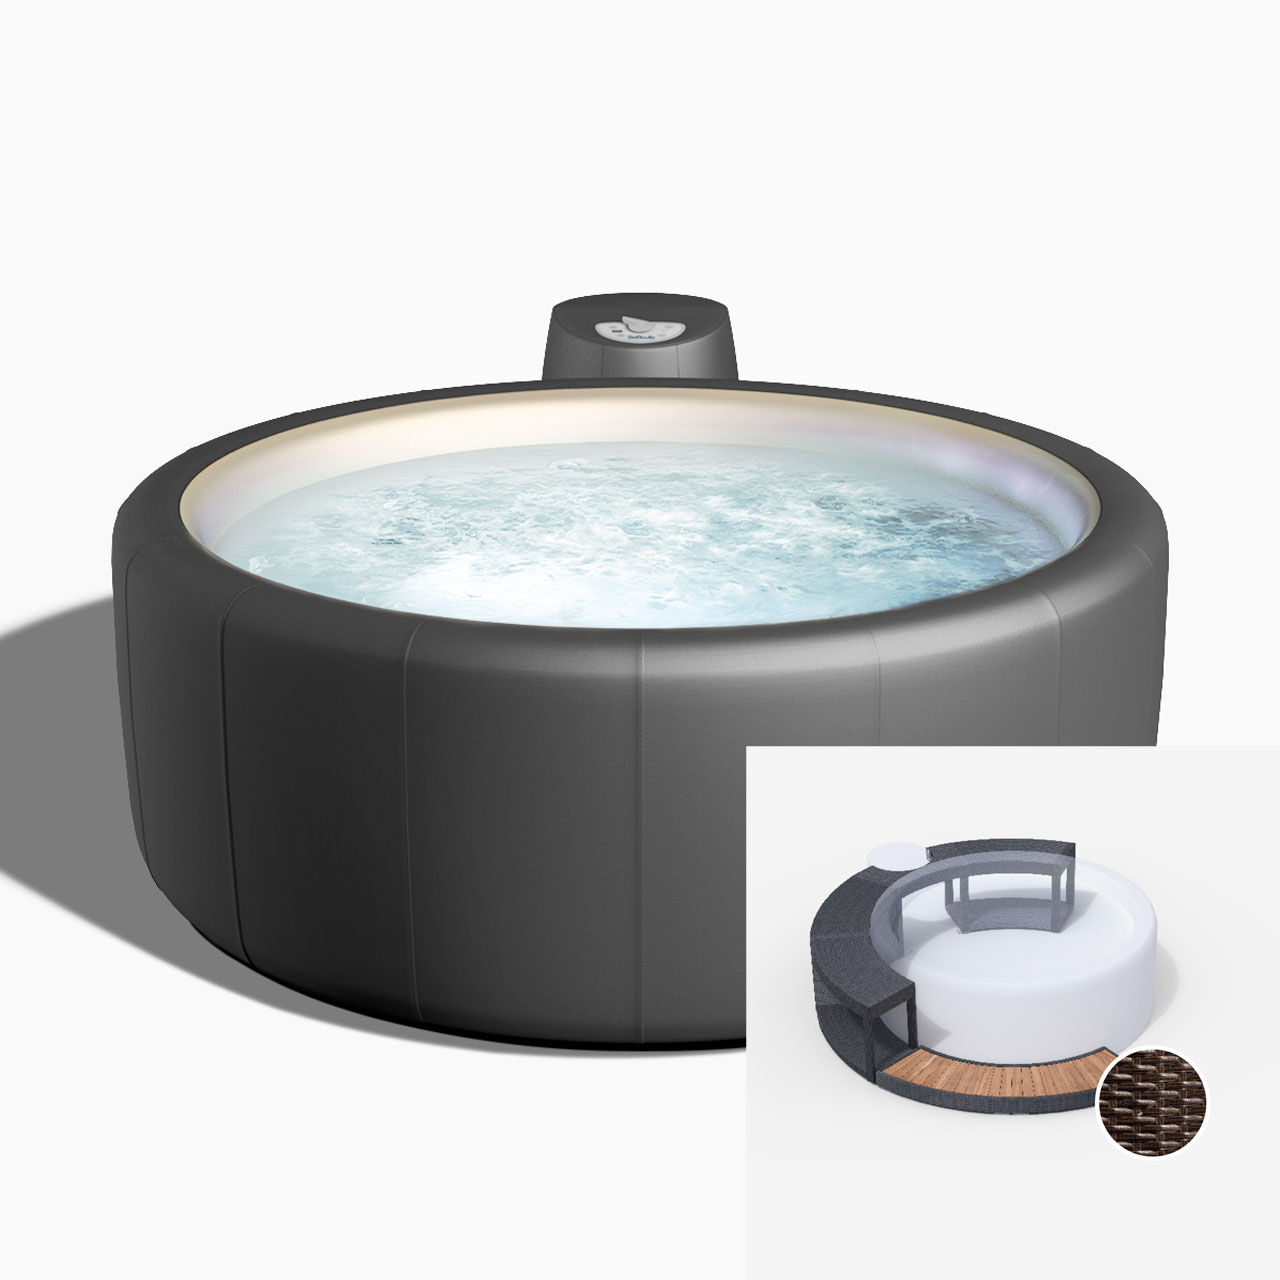 Softub Whirlpool LEGEND für 3-4 Pers.- Ø 180 cm - 830 l - graphite pearl im Set mit 5/8-Umrandung - Polyrattan - mocca